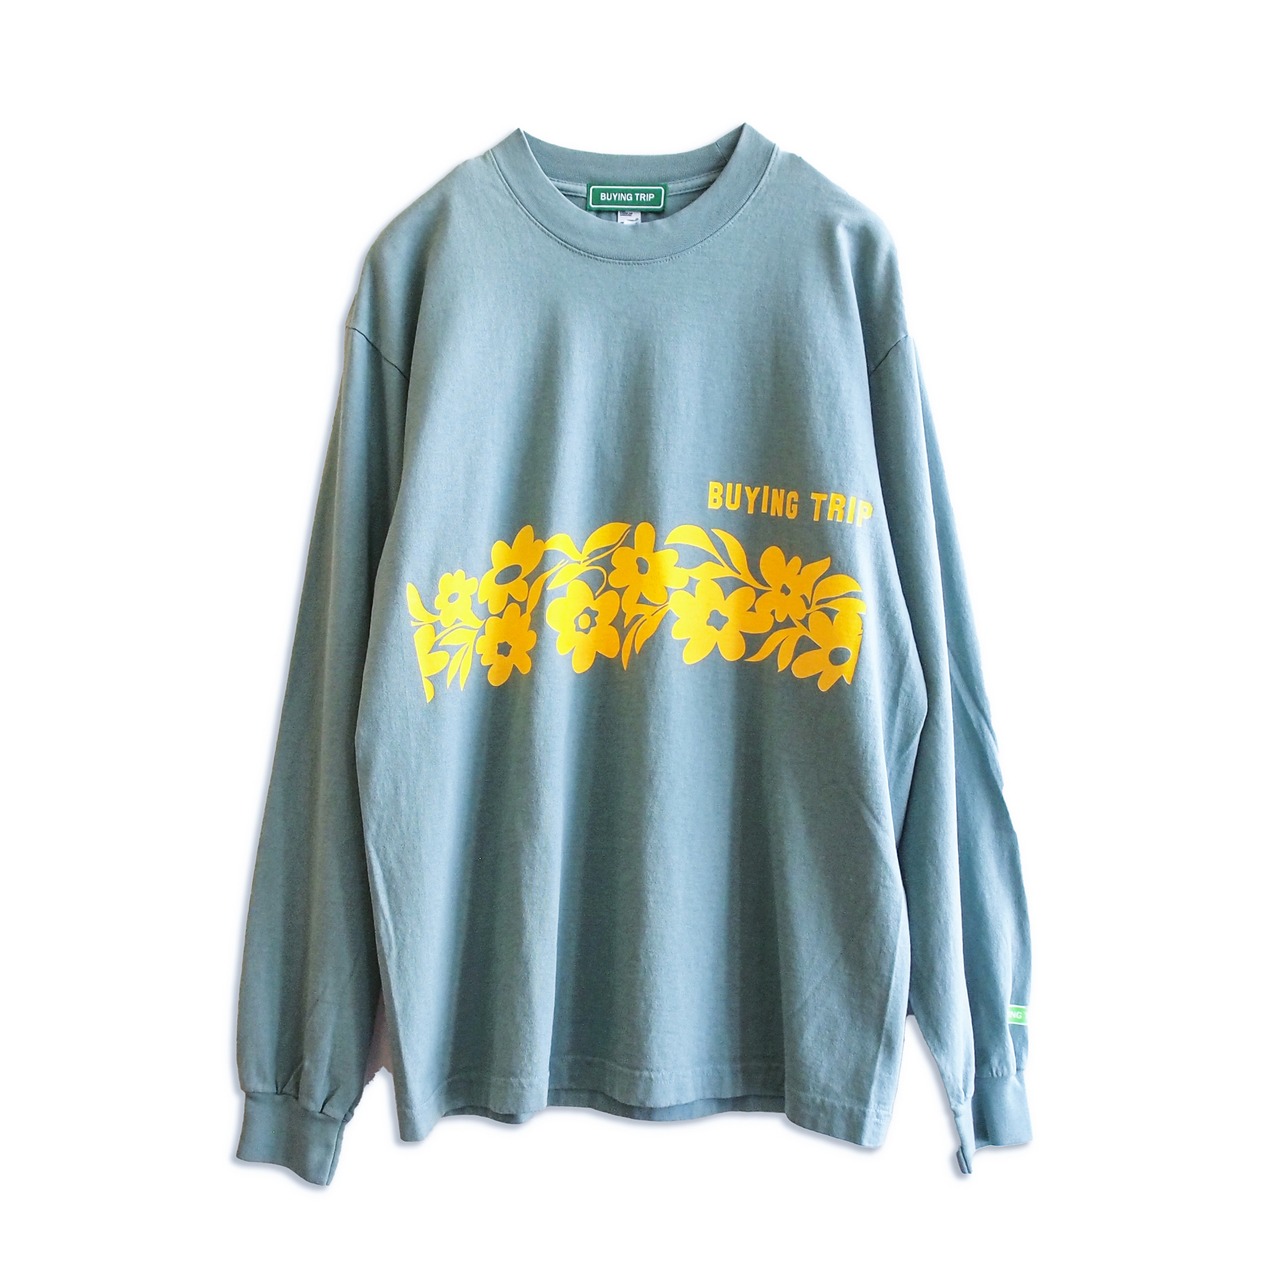 【BUYING TRIP】"Flower" Garment Dye Long Sleeve T-shirt (EMERALD GREEN DYED)